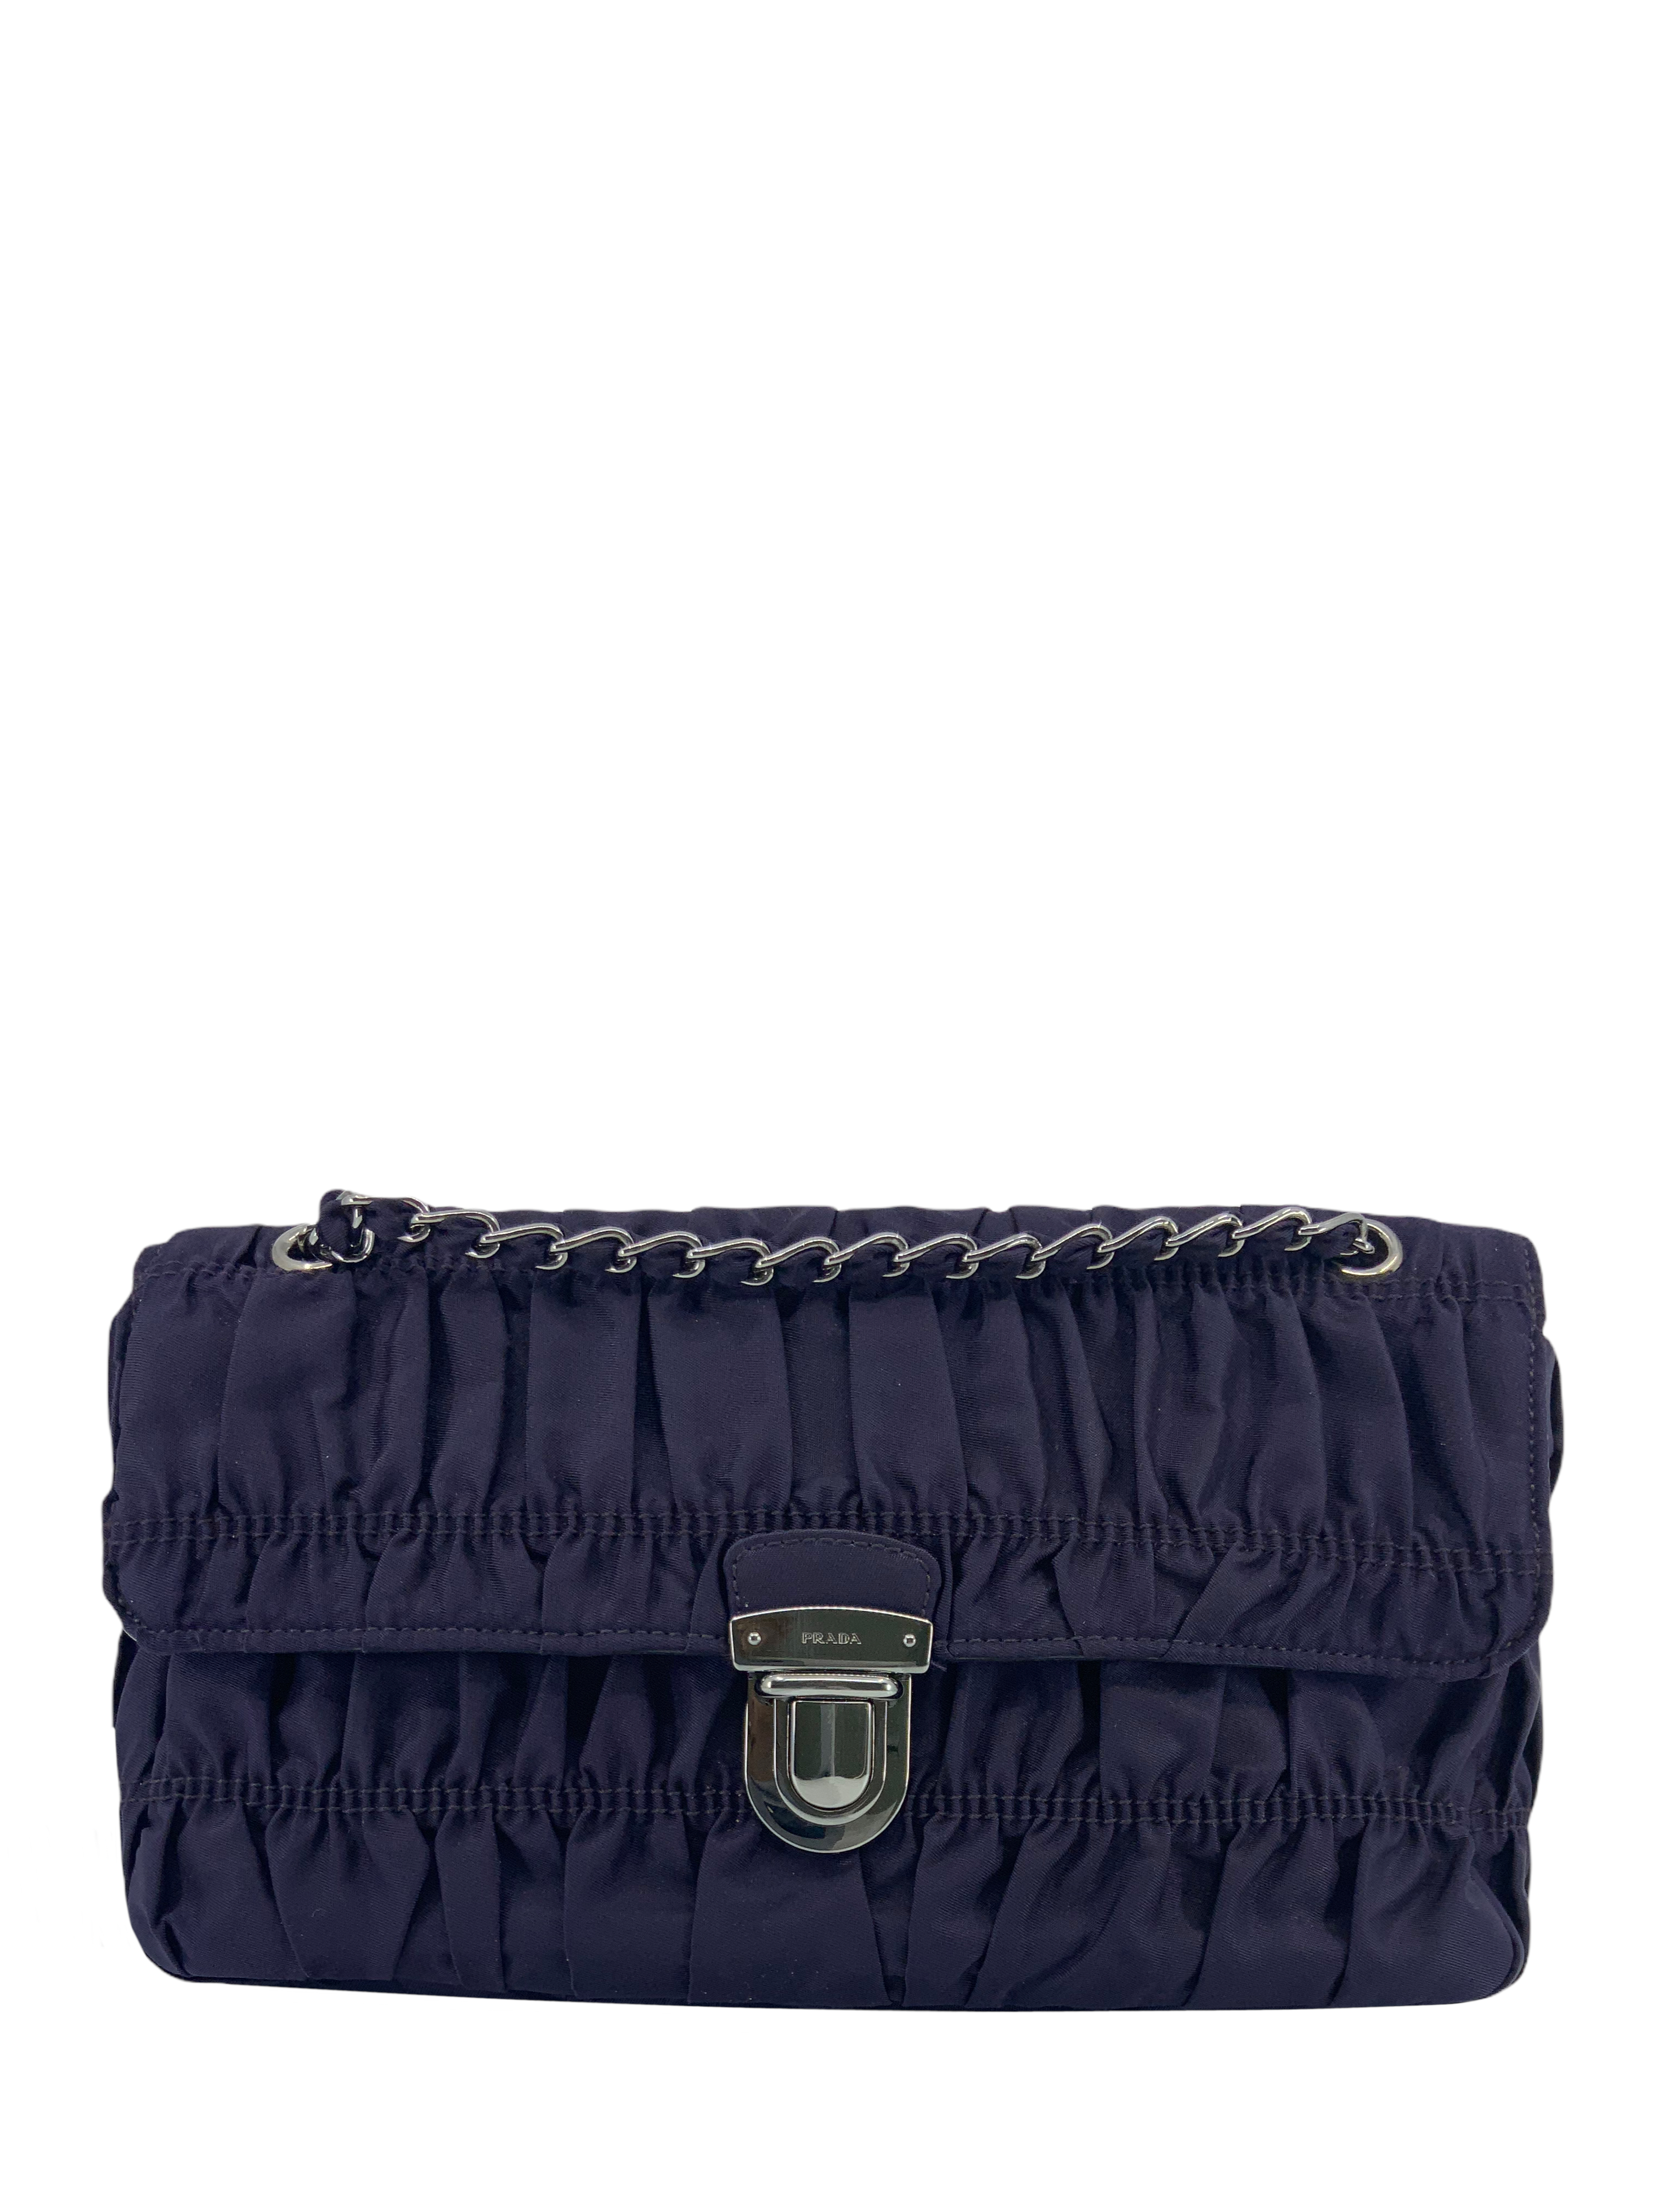 Prada Identity Full Flap Shoulder Bag Tessuto with Leather Small Black  1102731